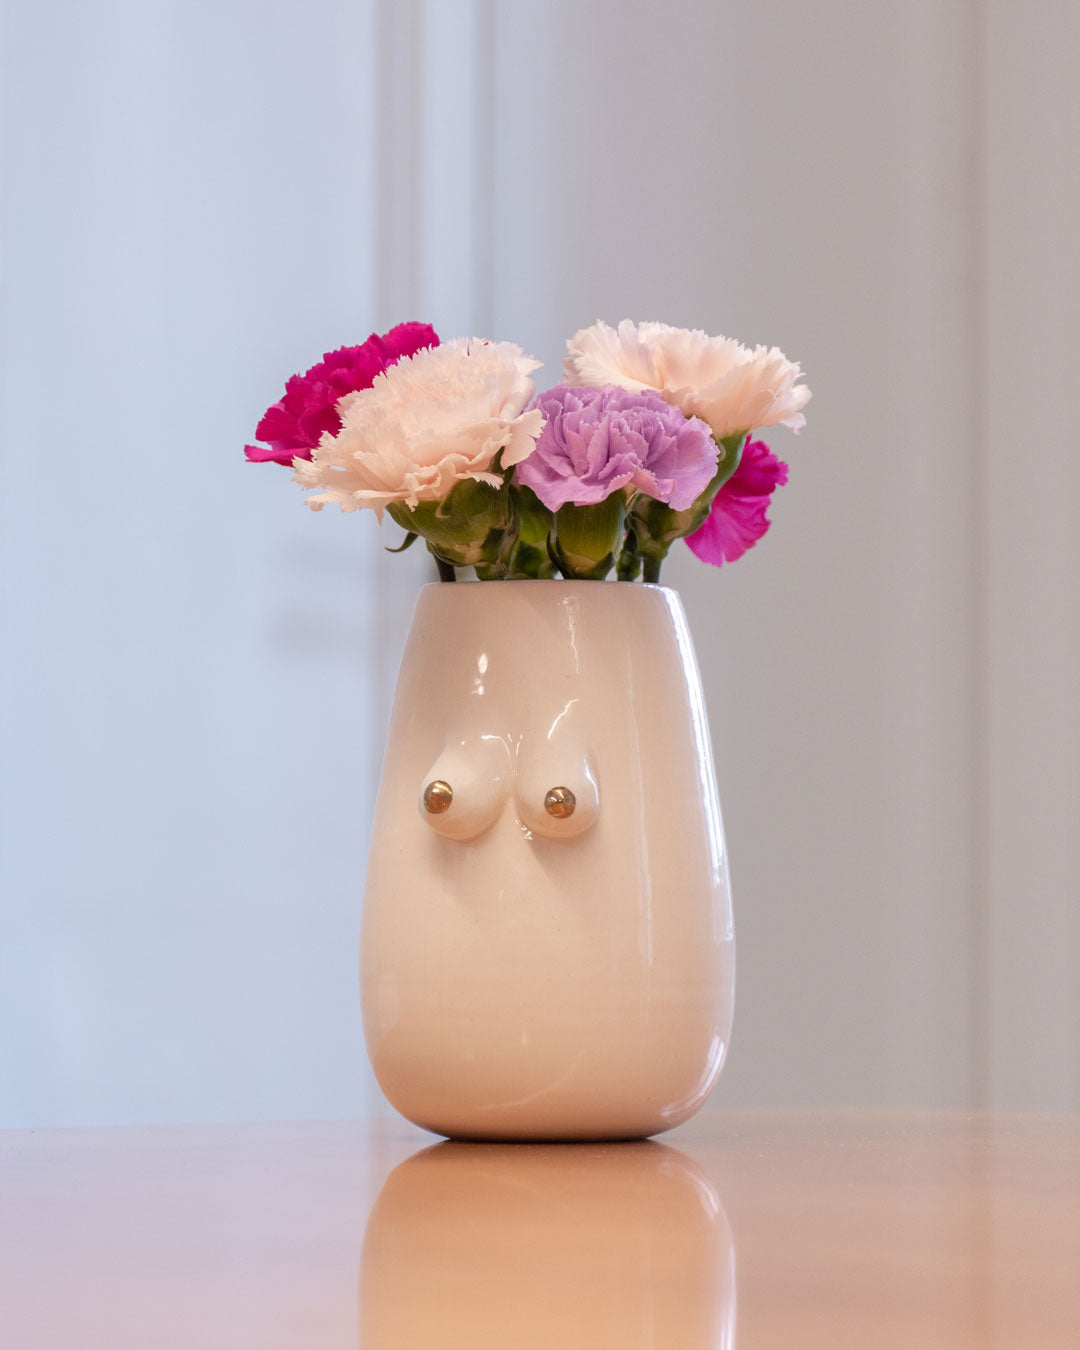 Mulher Objeto Small vase